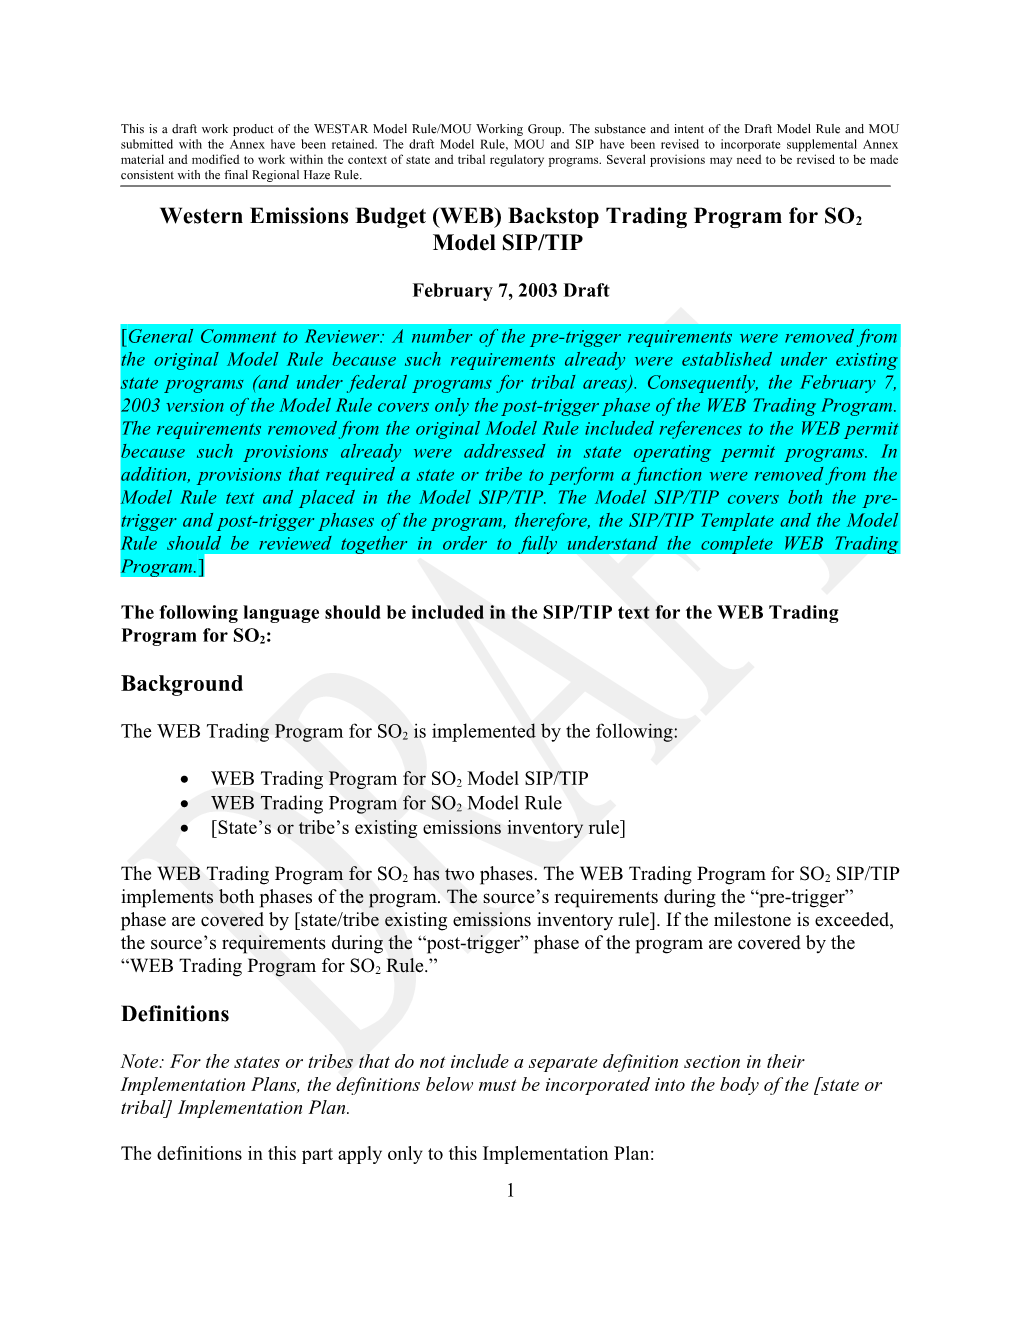 Western Emissions Budget (WEB) Backstop Trading Program for SO2